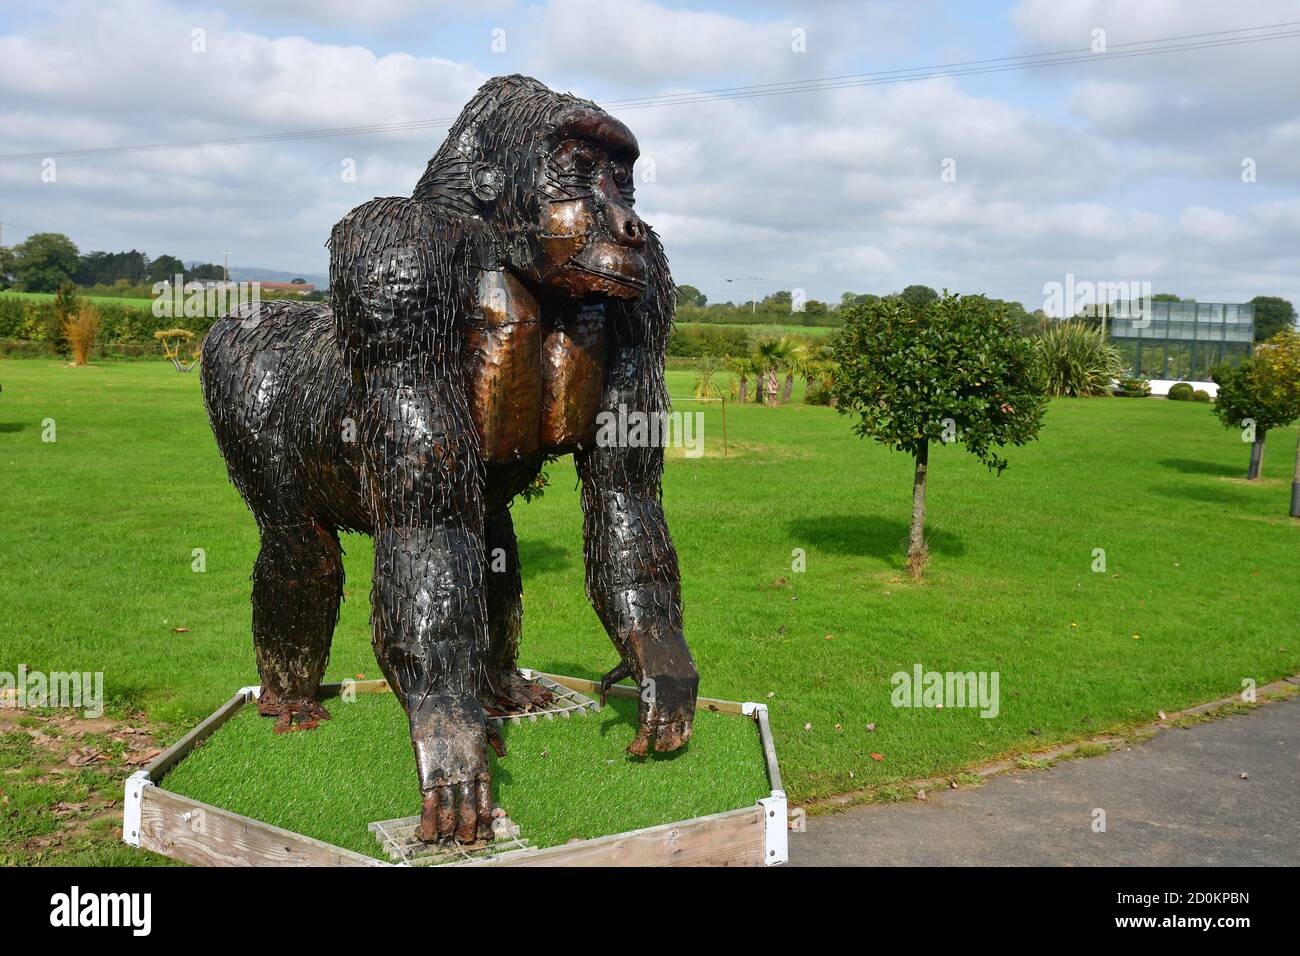 Gorilla Sculpture at the British Ironwork Centre and Shropshire ...